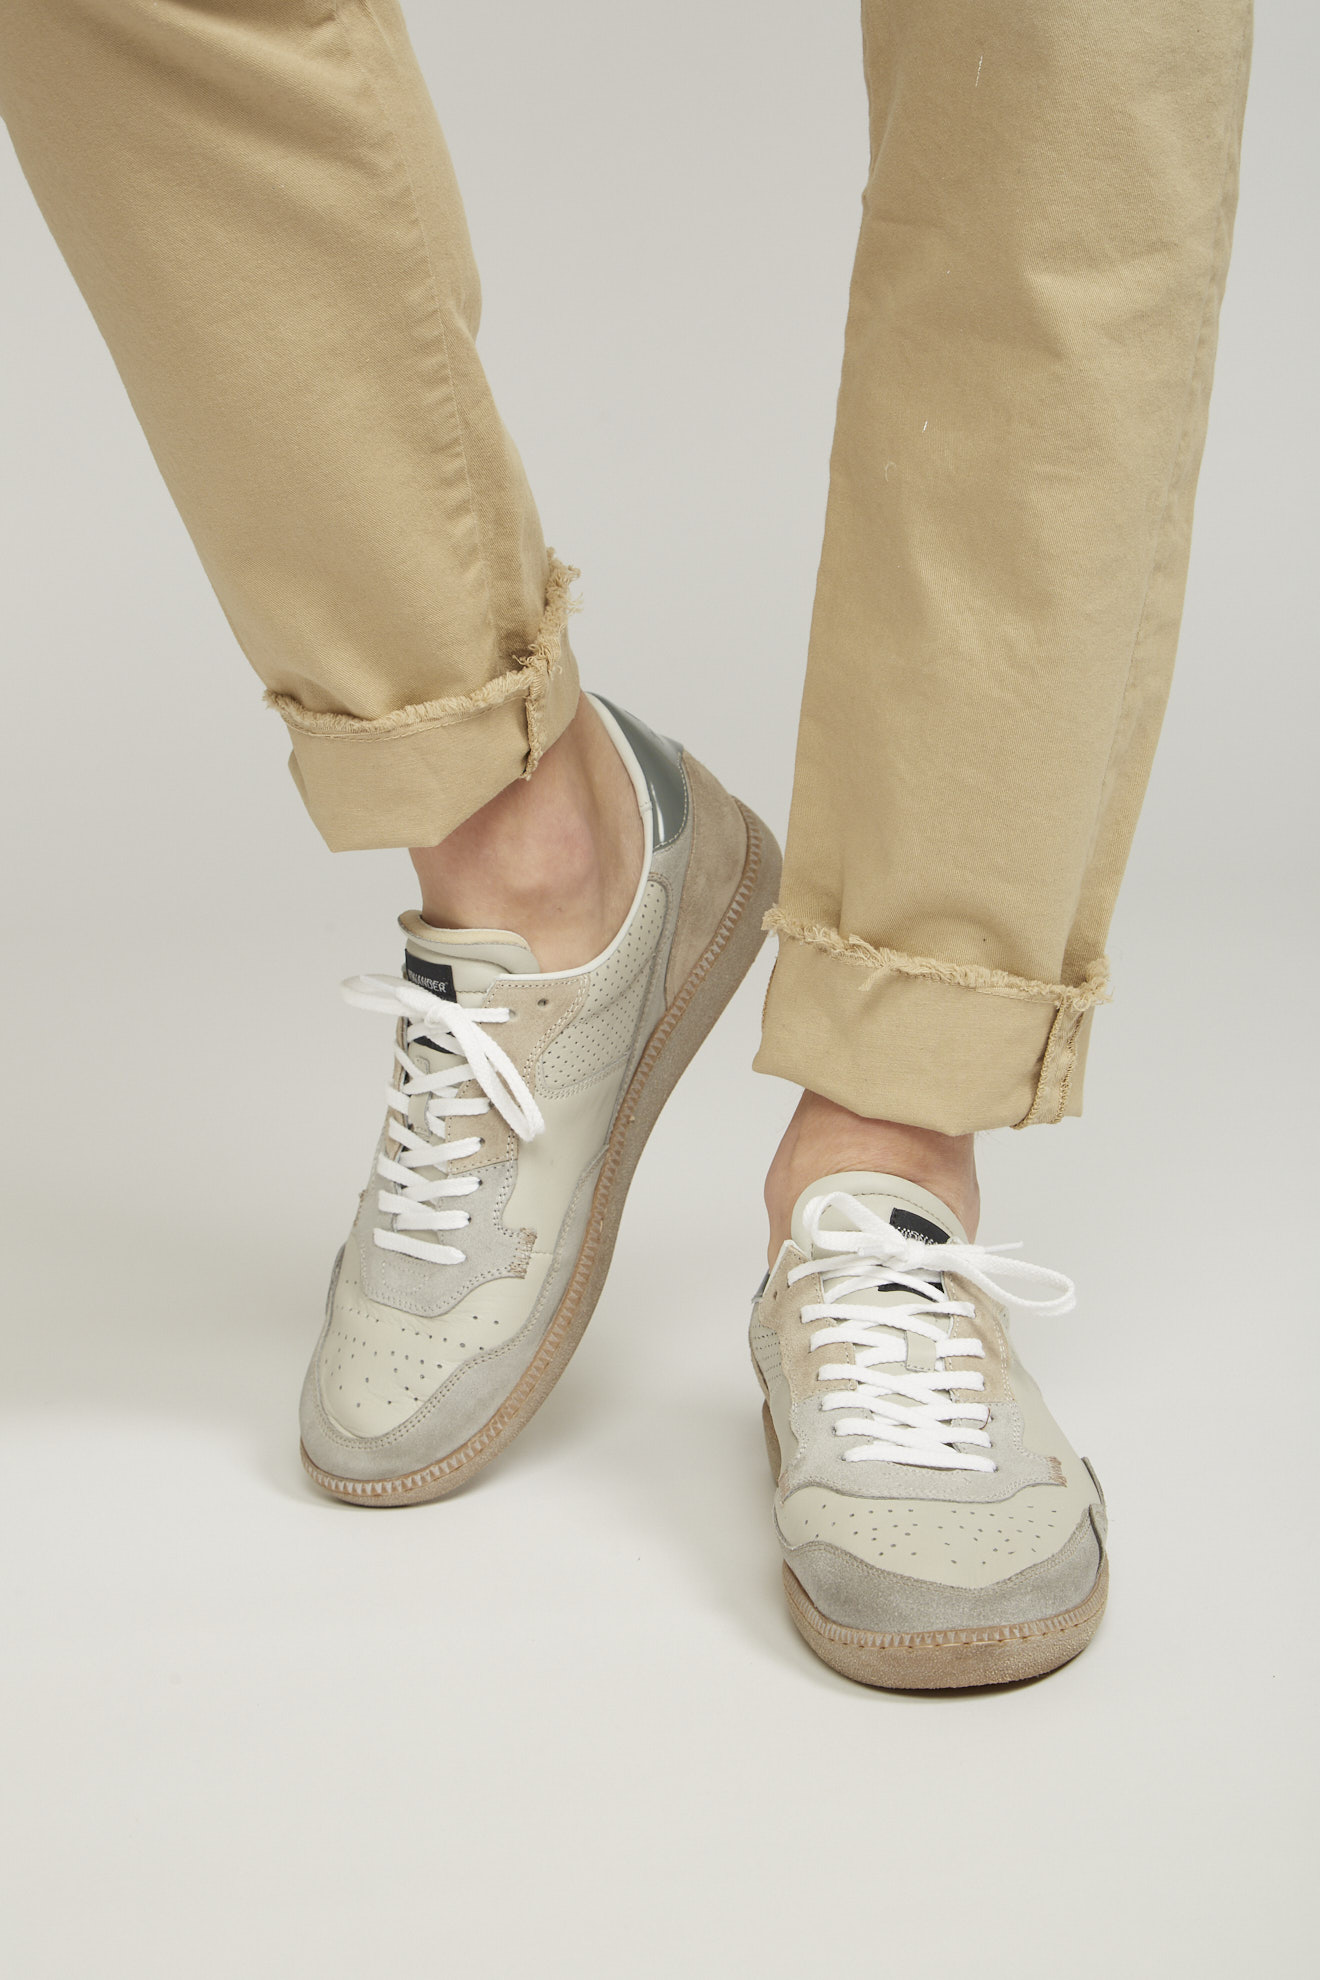 hidnander shoes beige white&grey details leather model front